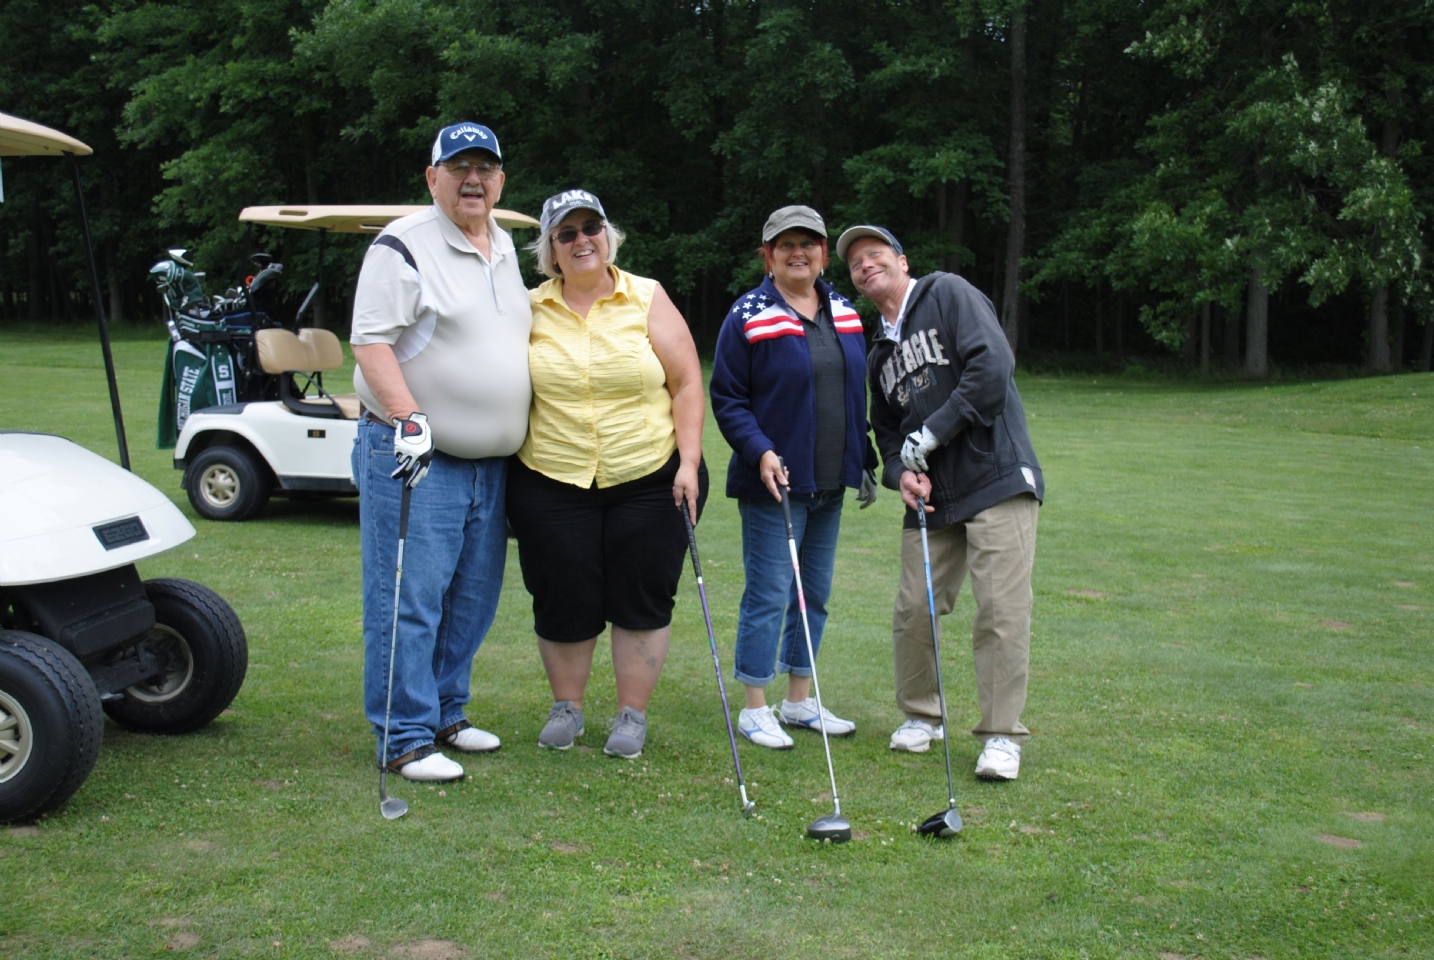 Village Green Golf Course, Newaygo, MI

Annabelle Furgurson
Gary Palmiter
Beth Plant
Rick Young
